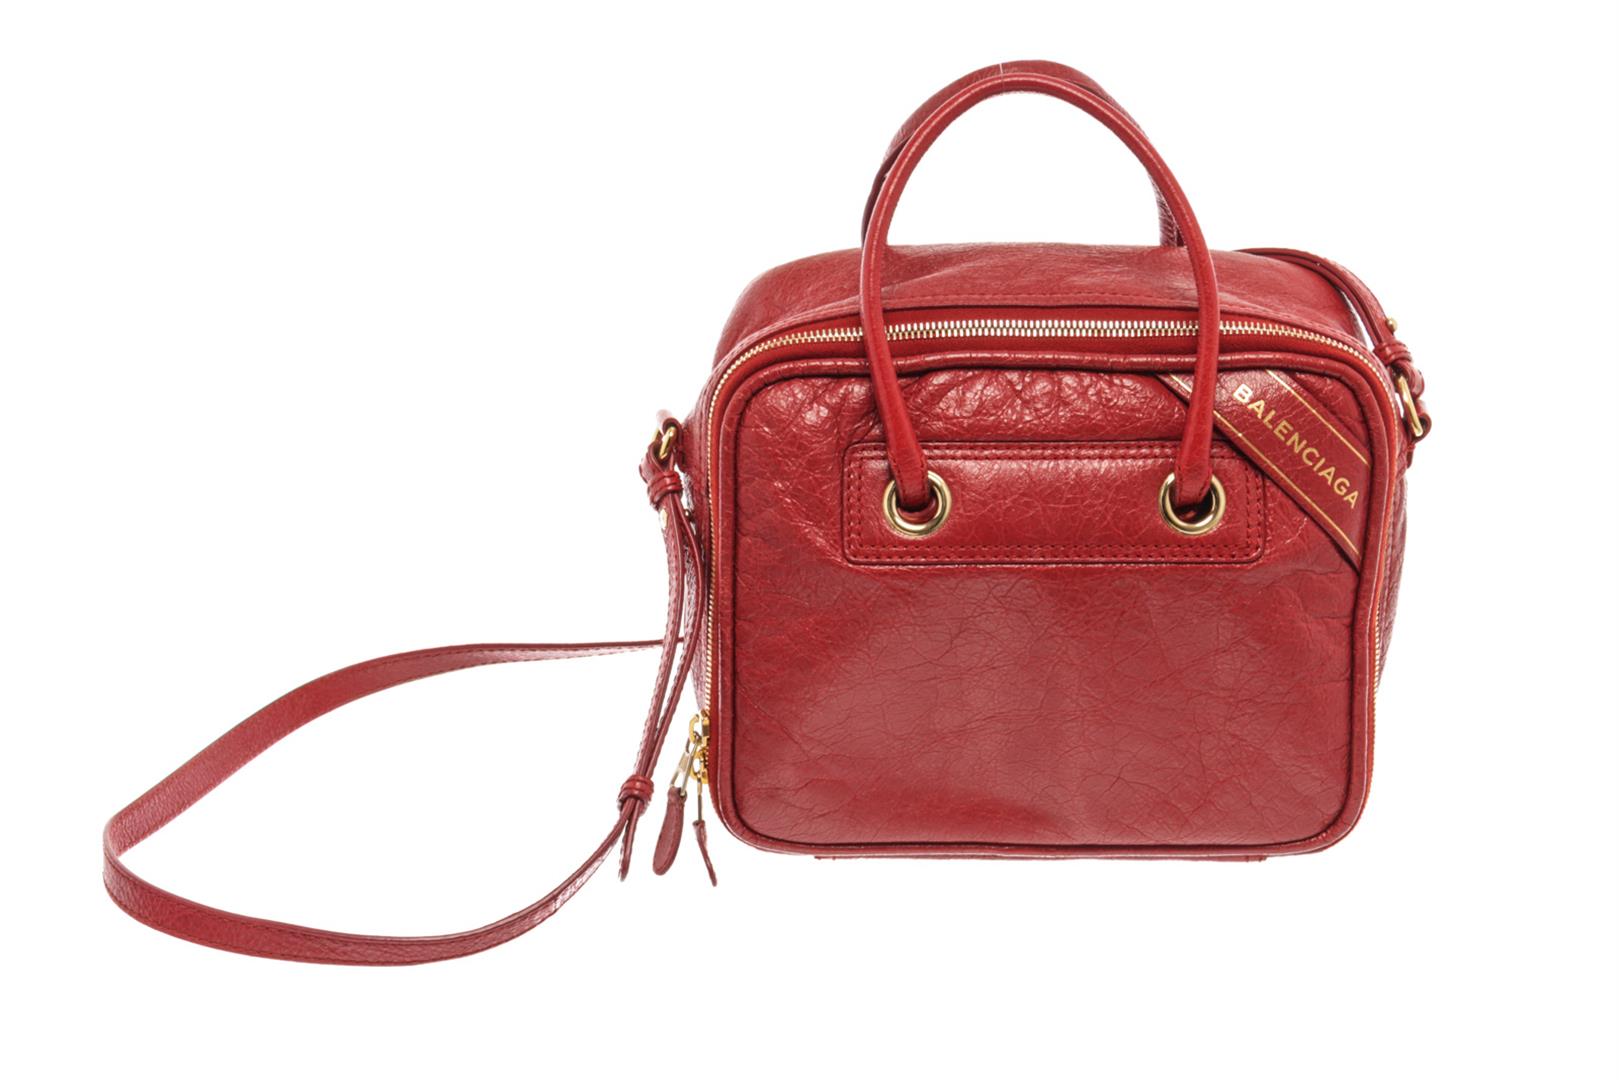 Louis Vuitton Red Leather Lumineuse Pm Shoulder Bag Auction